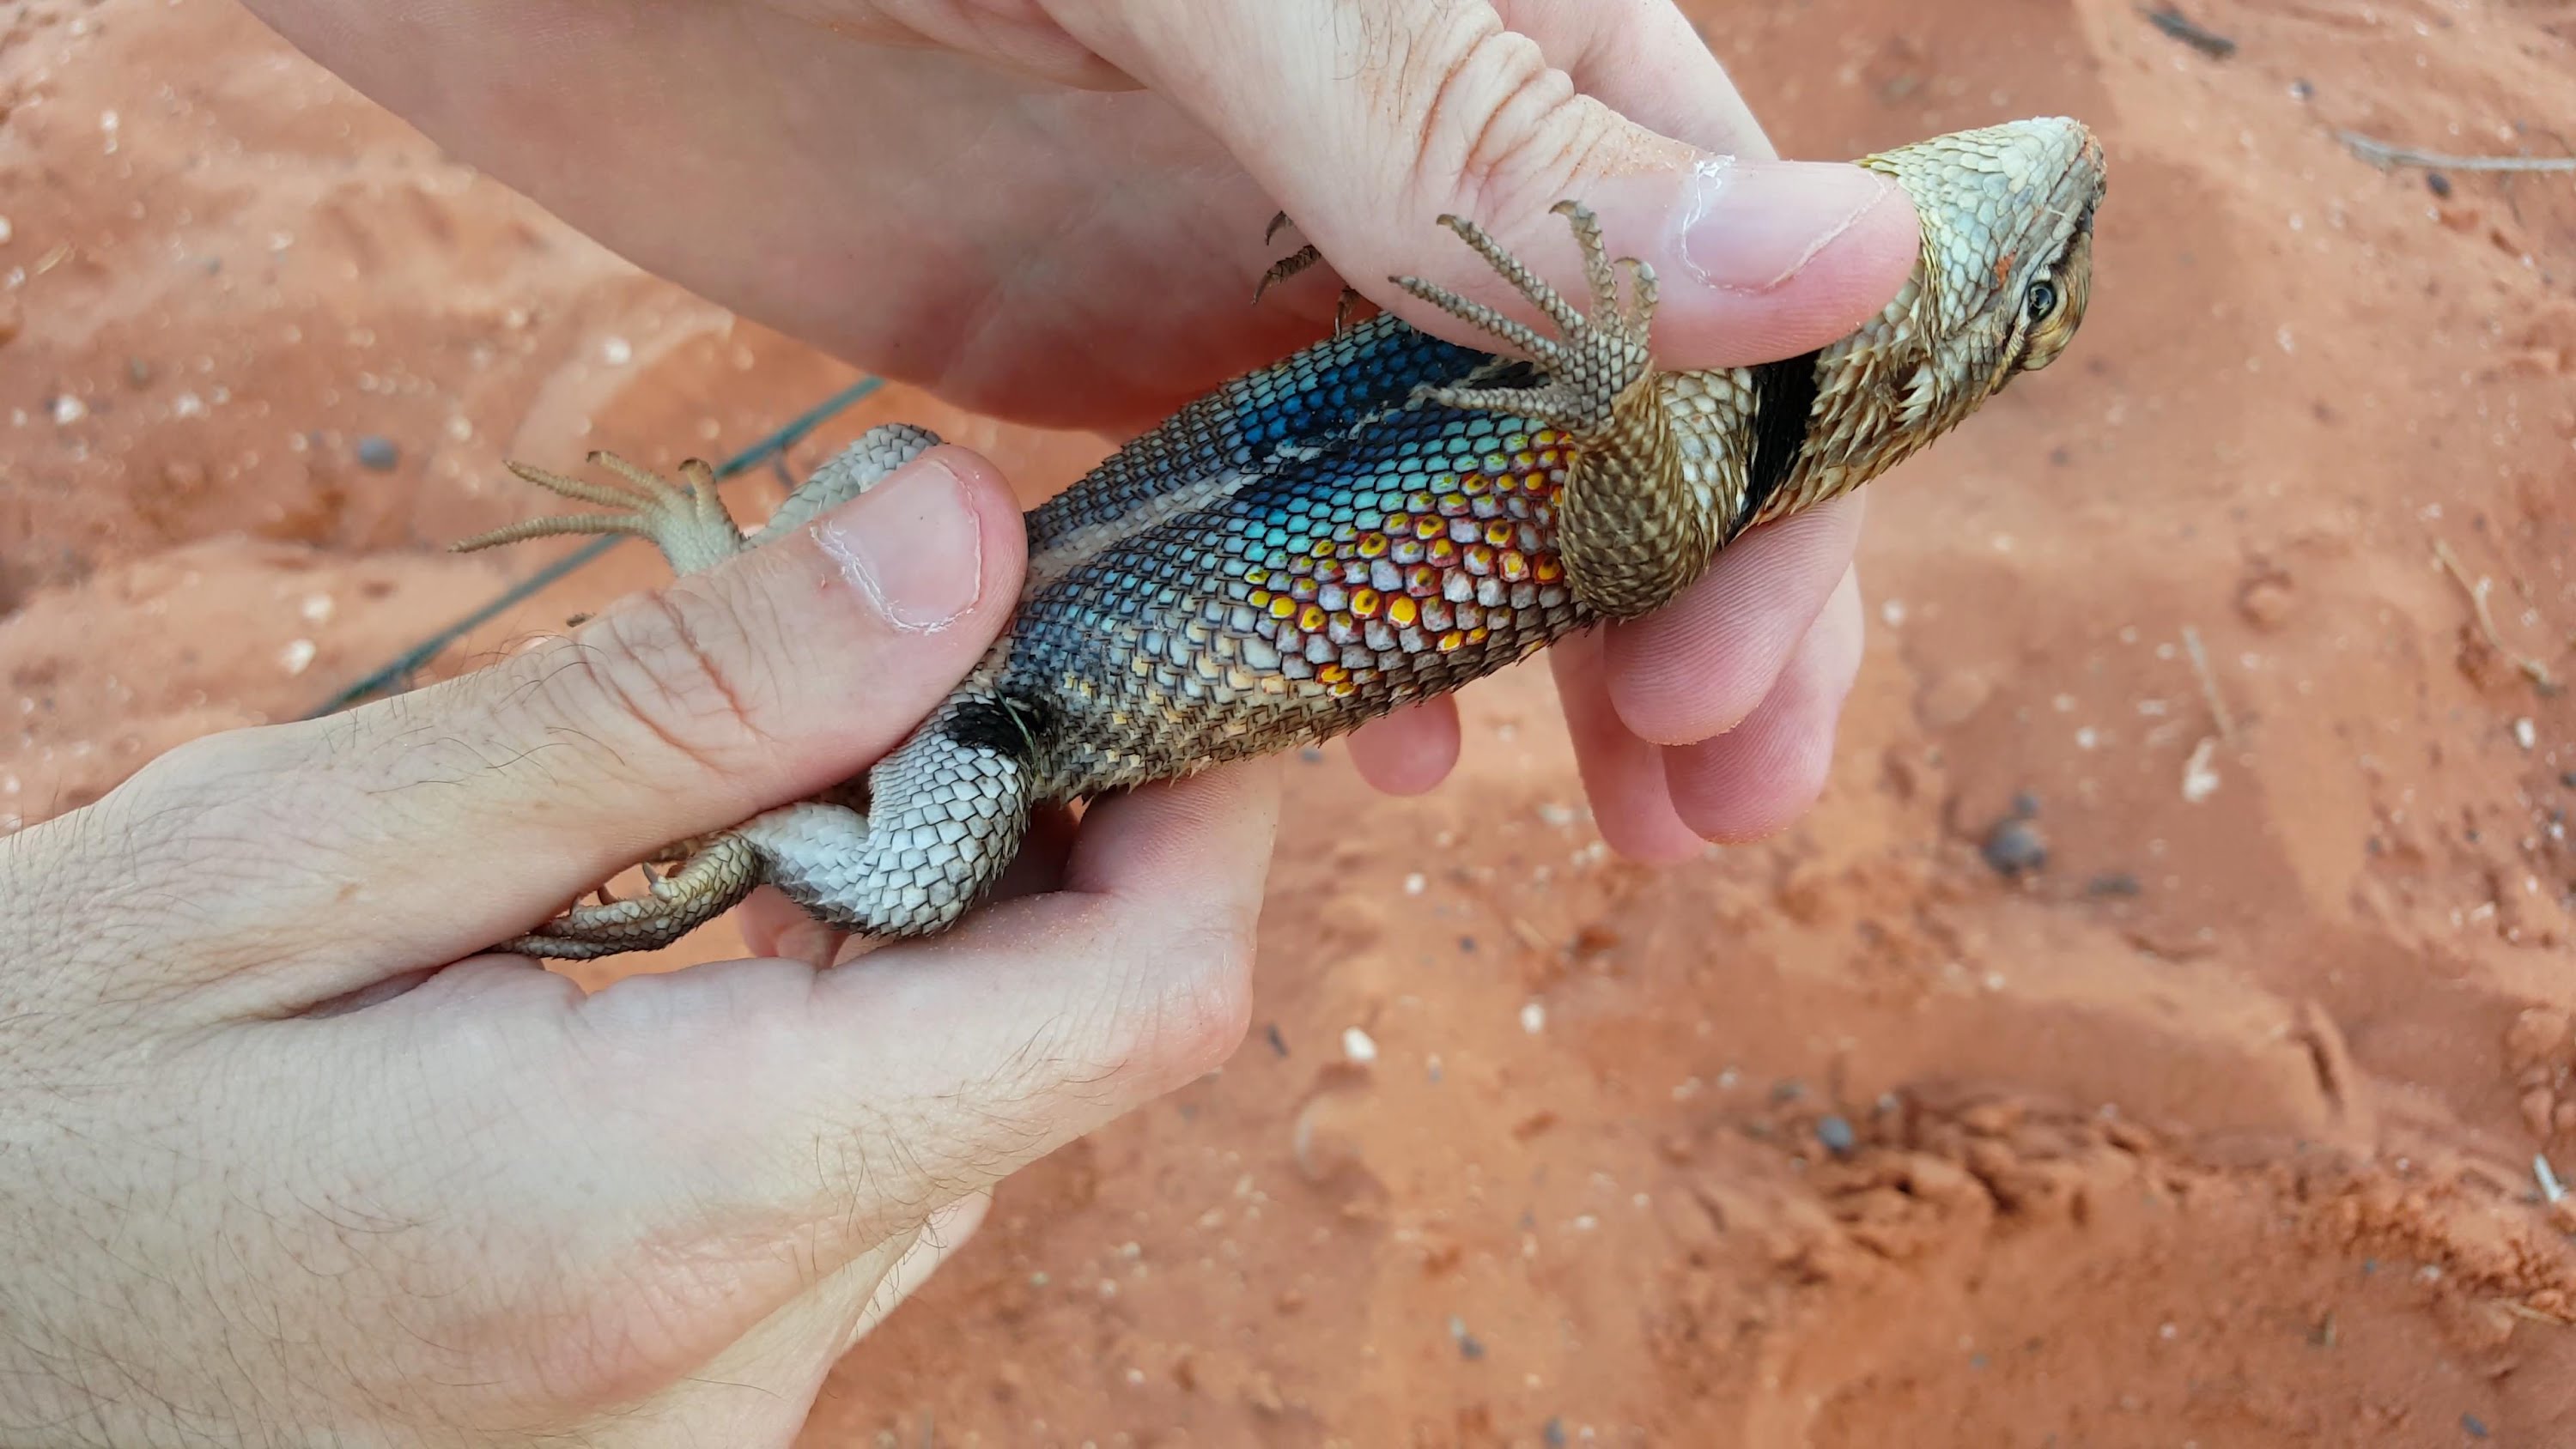 4K CC. BAD WORDS! Huge Desert Spiny Lizard, Catching Reptile ...